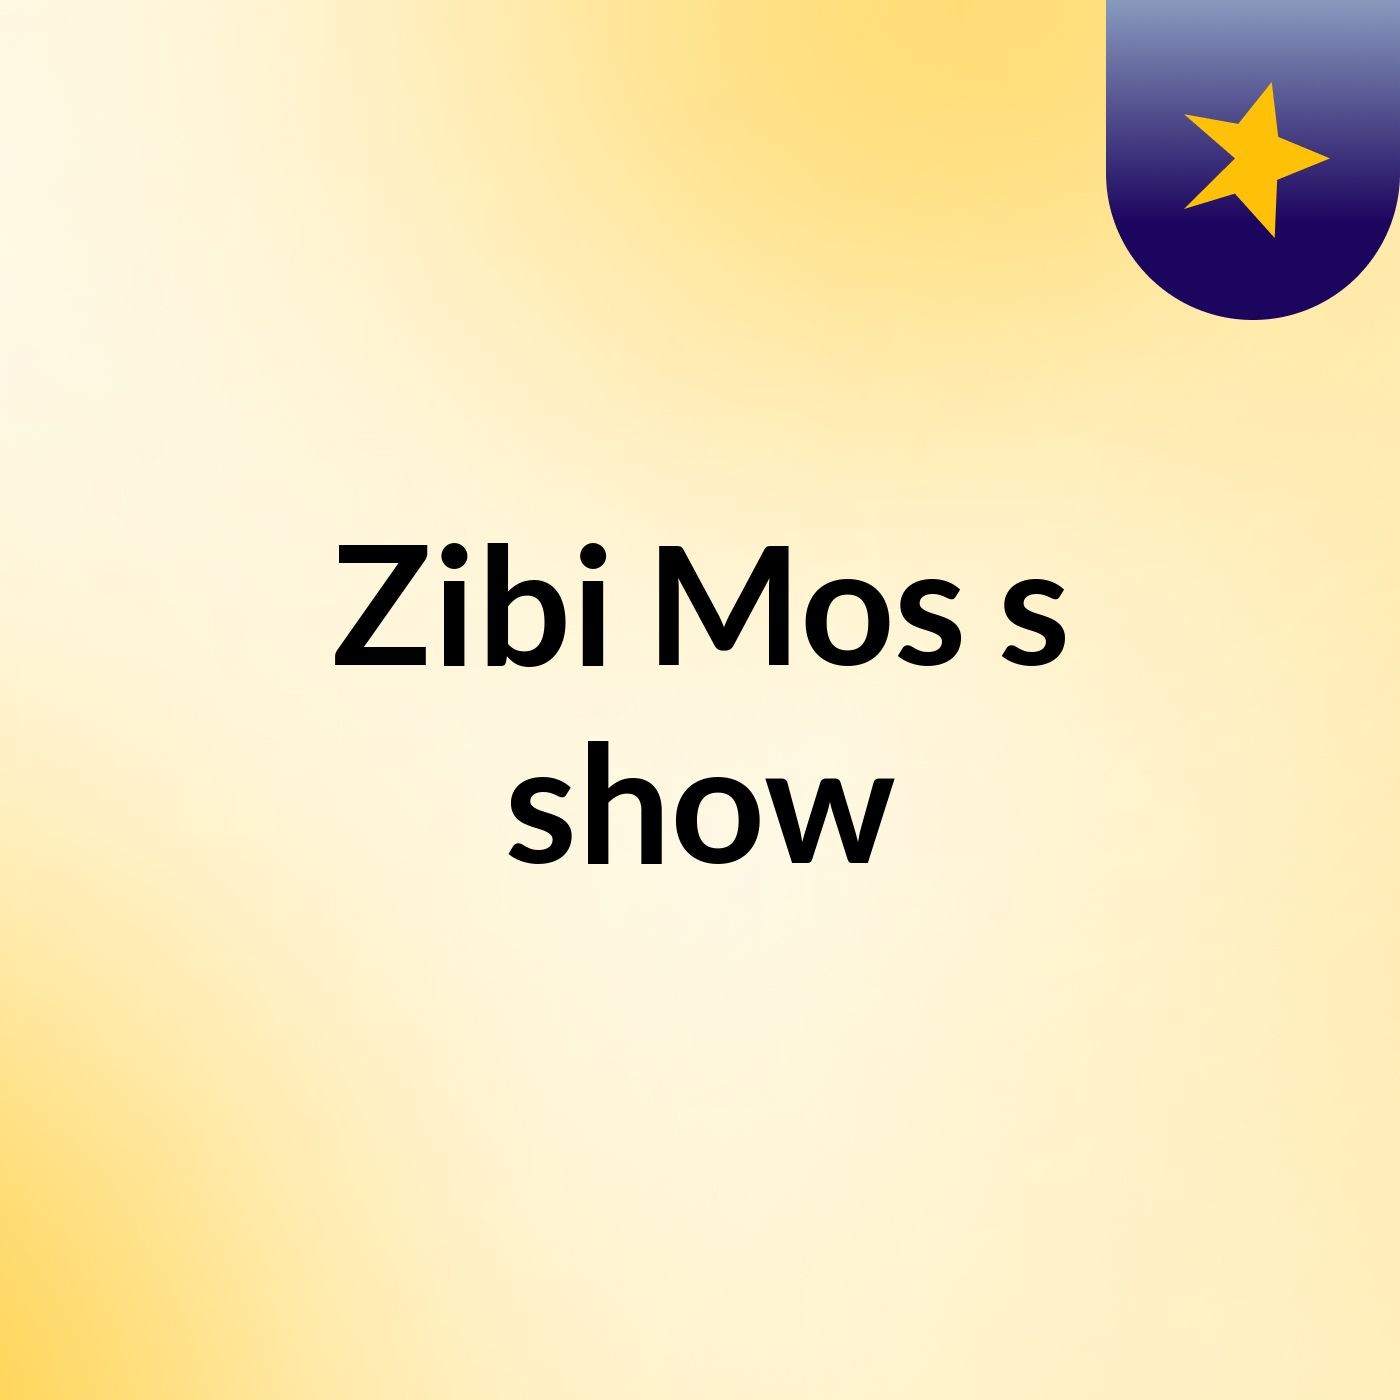 Zibi Mos's show